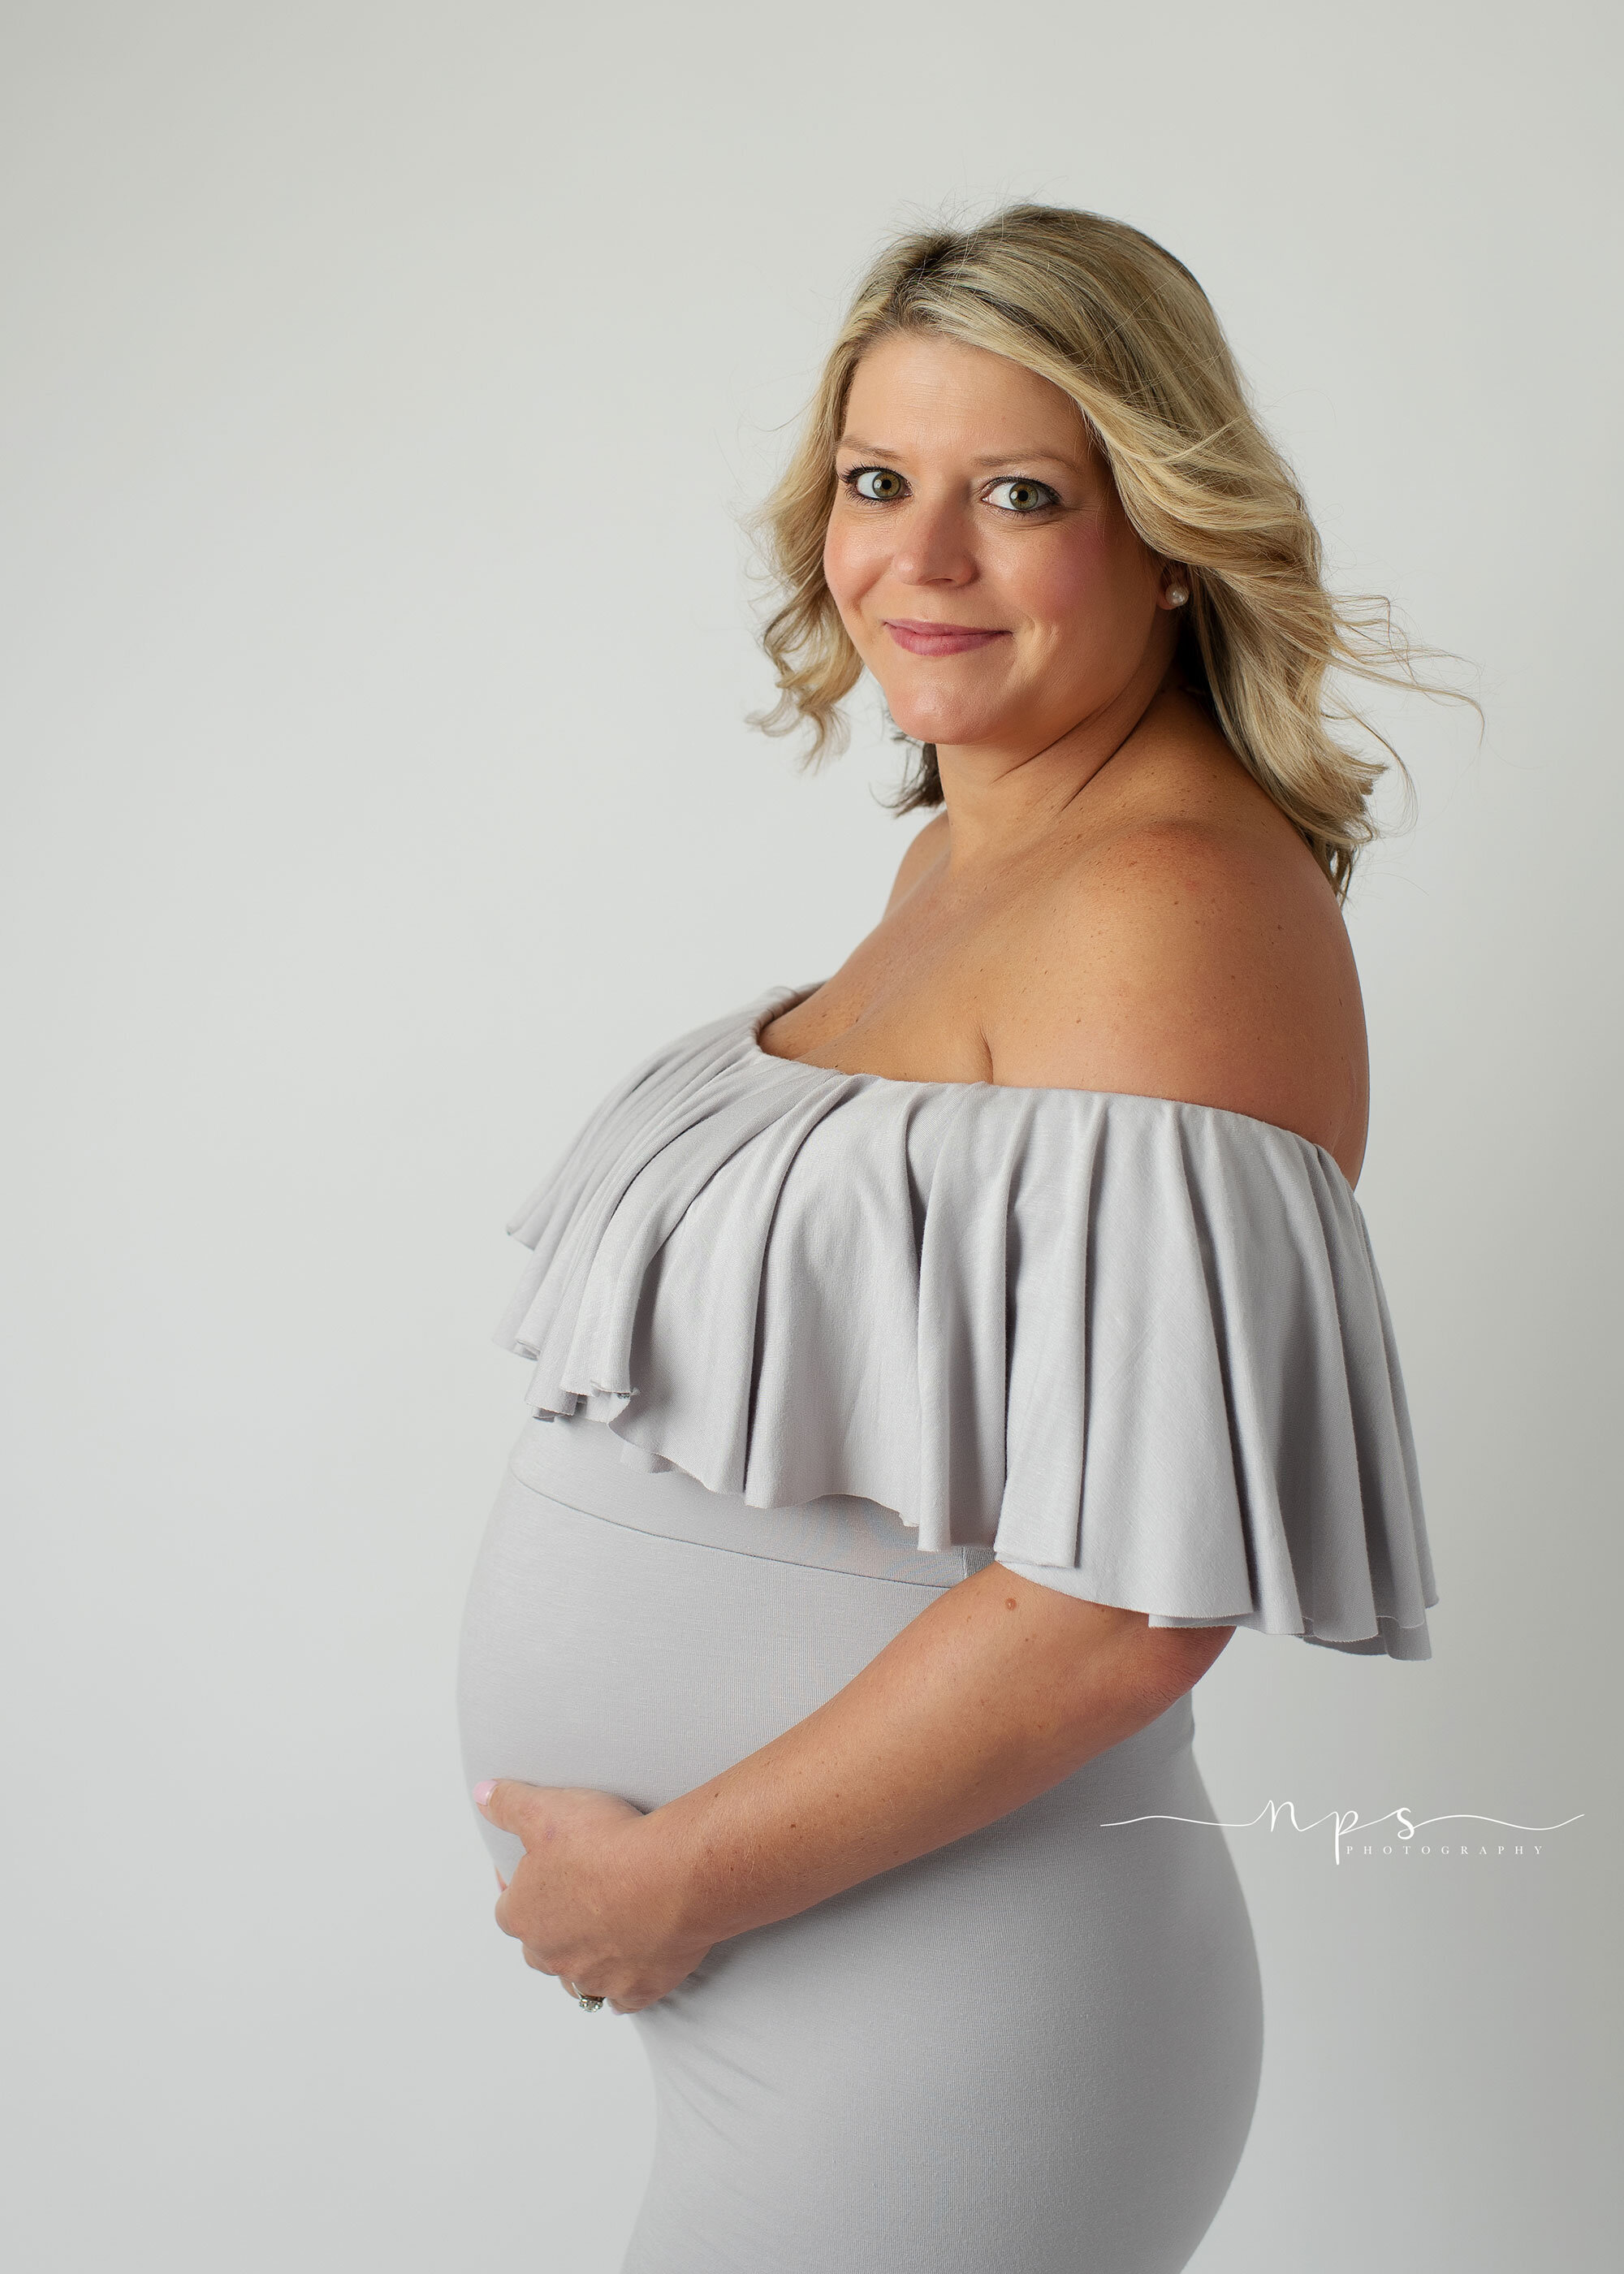 Maternity Portrait Ideas 005 - NPS Photography